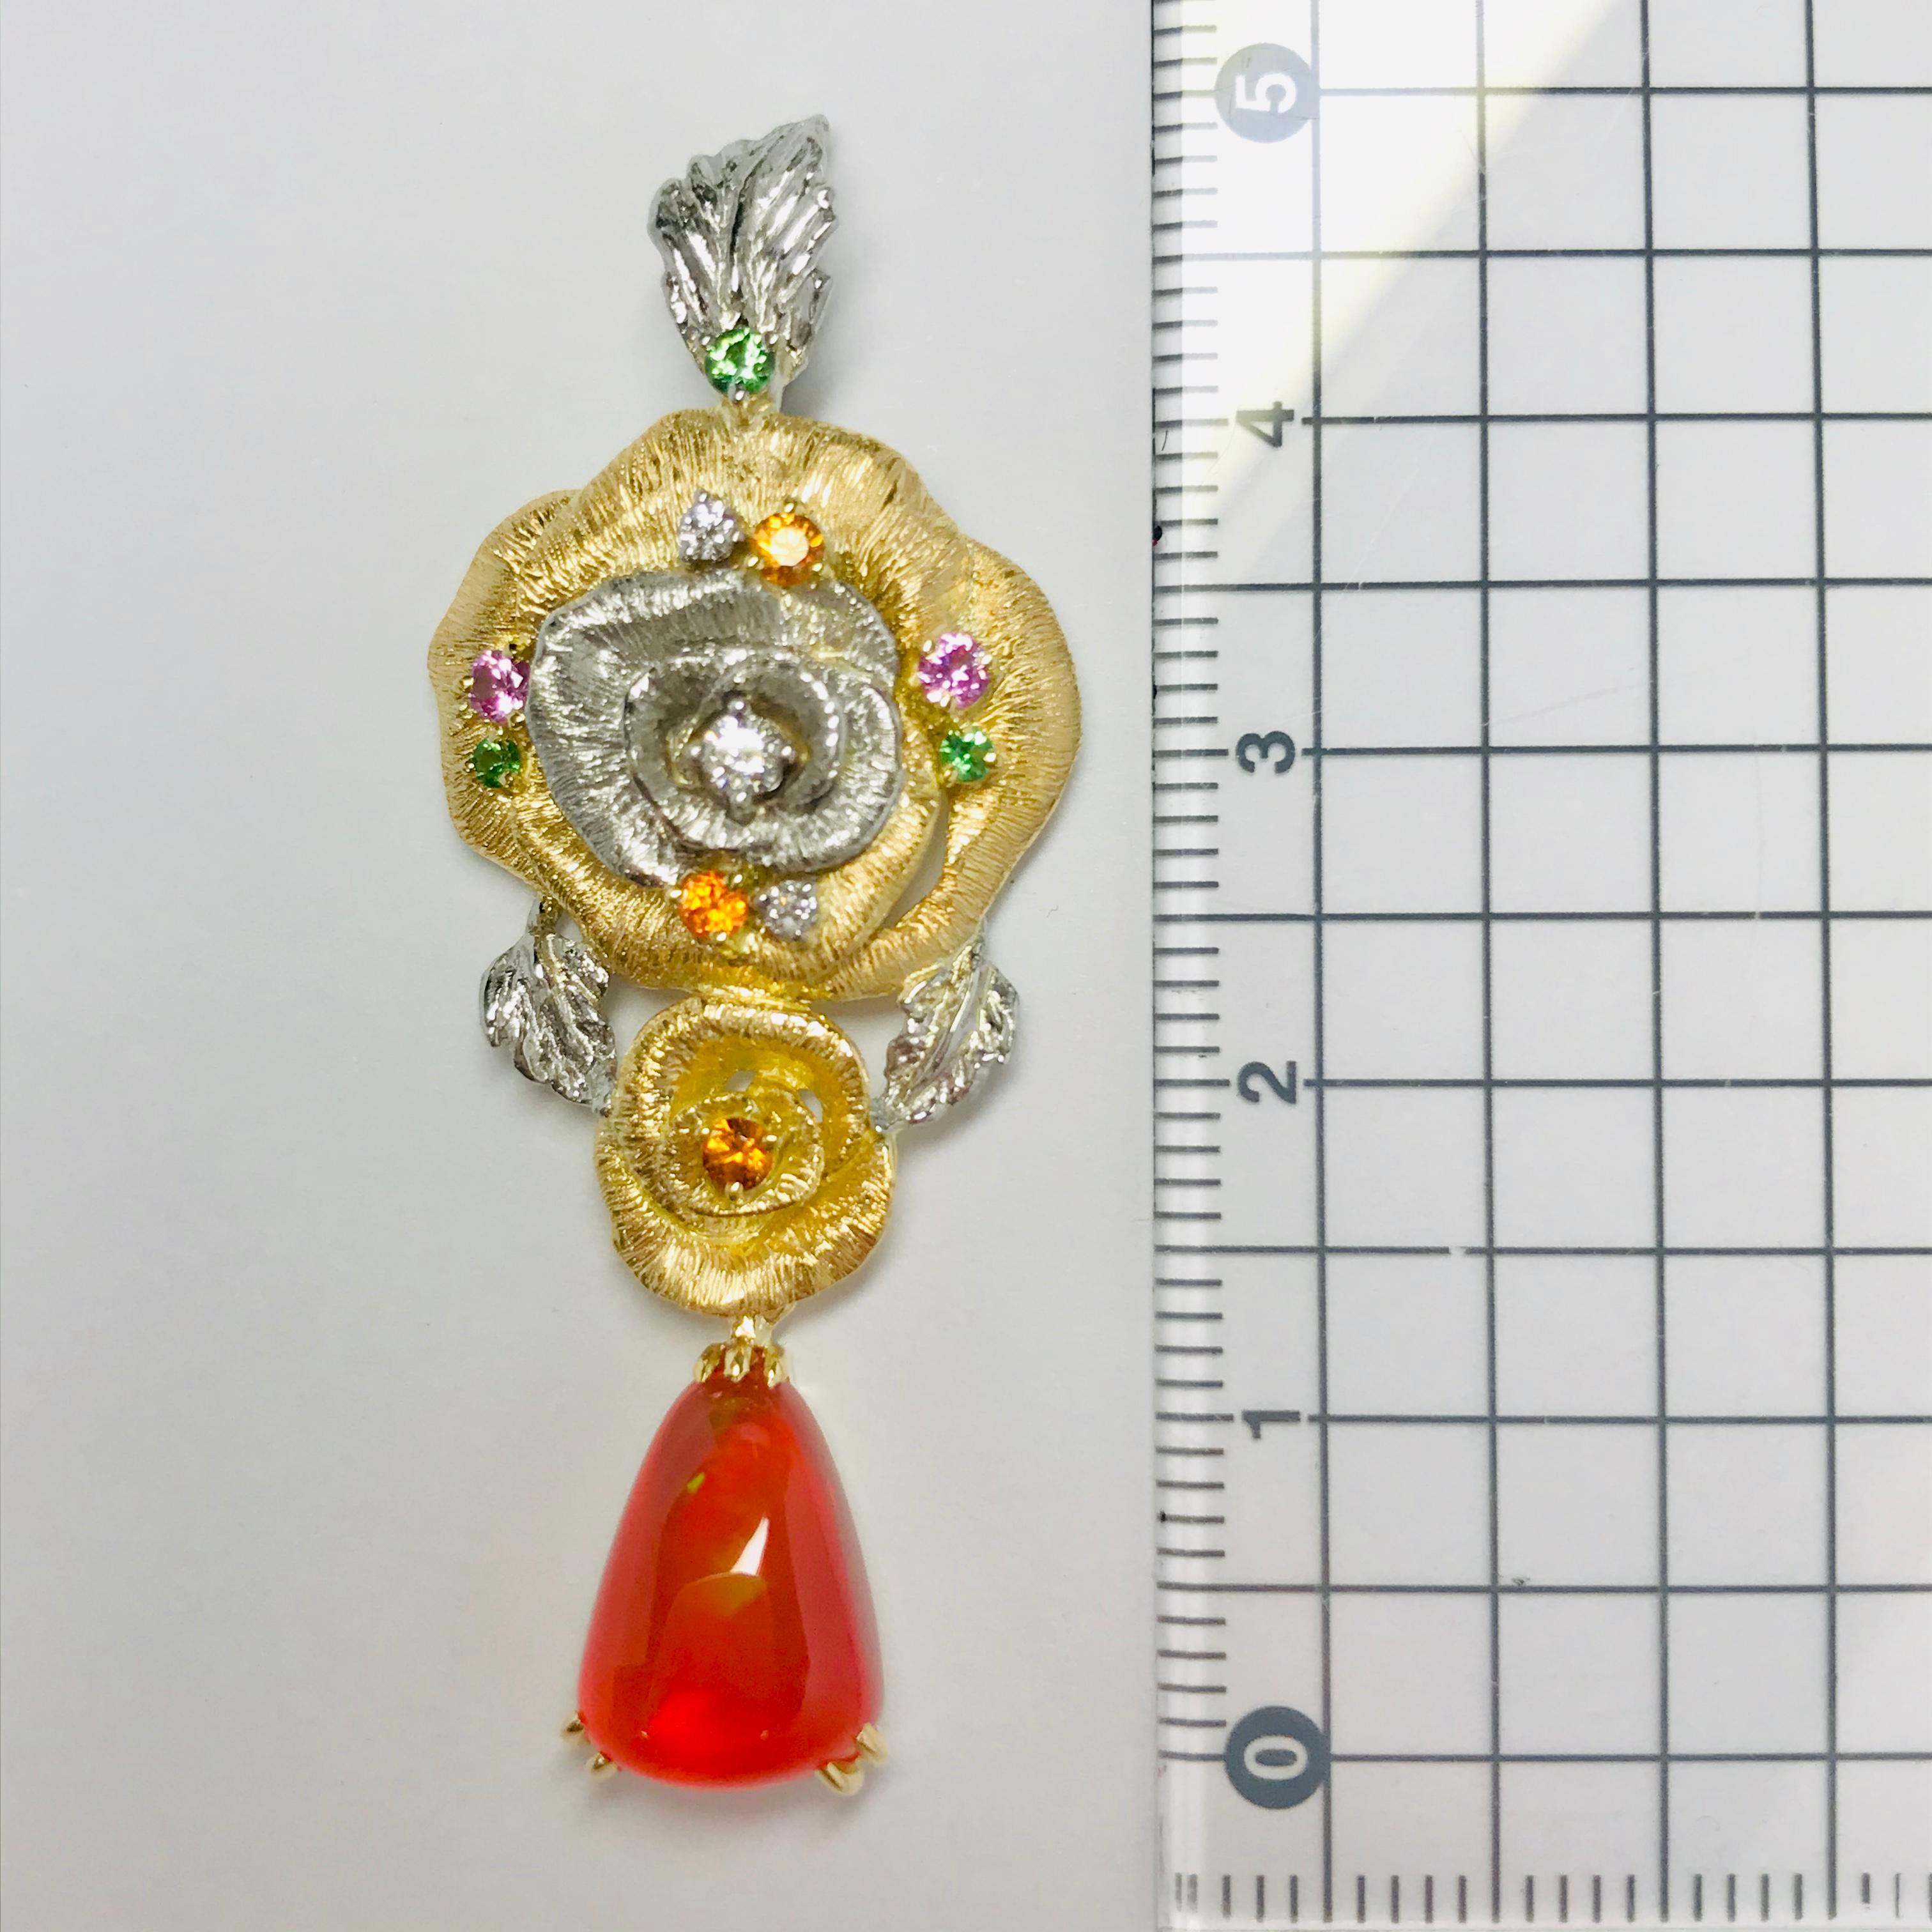 Matsuzaki K18 Gold Platinum Rose Flower 3.02 Carat Fire Opal Pendant Necklace For Sale 8